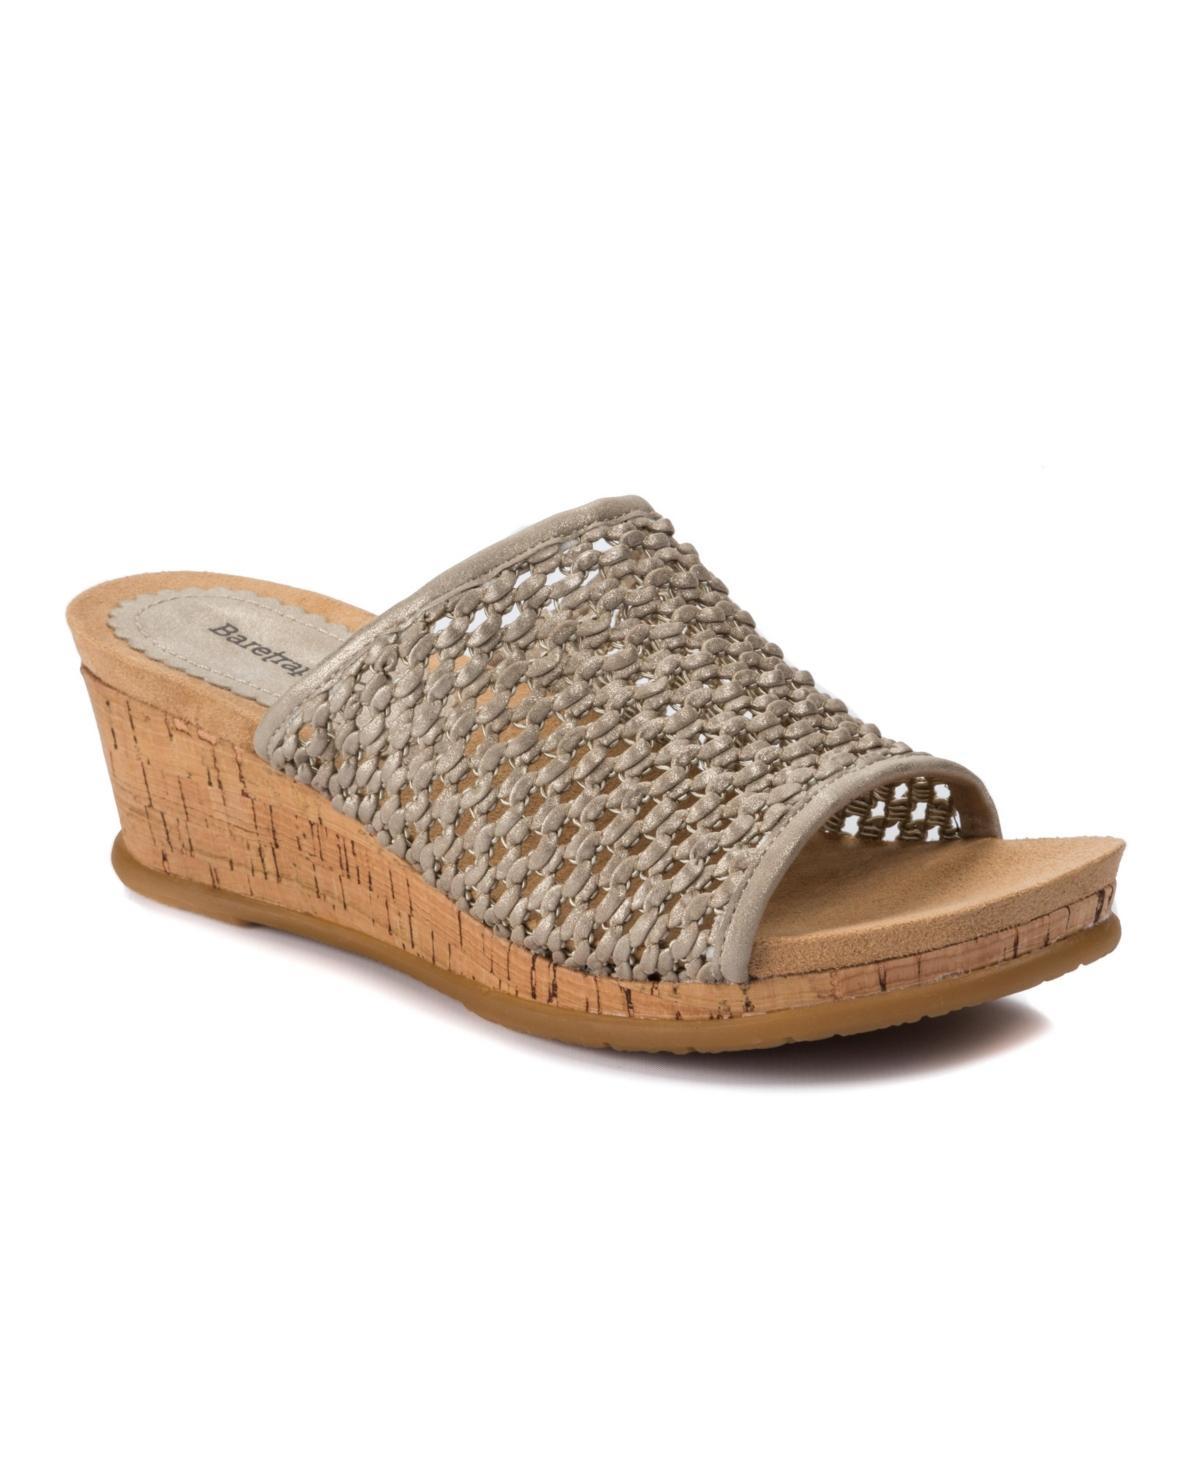 Baretraps Womens Flossey Slide Wedge Sandals Product Image